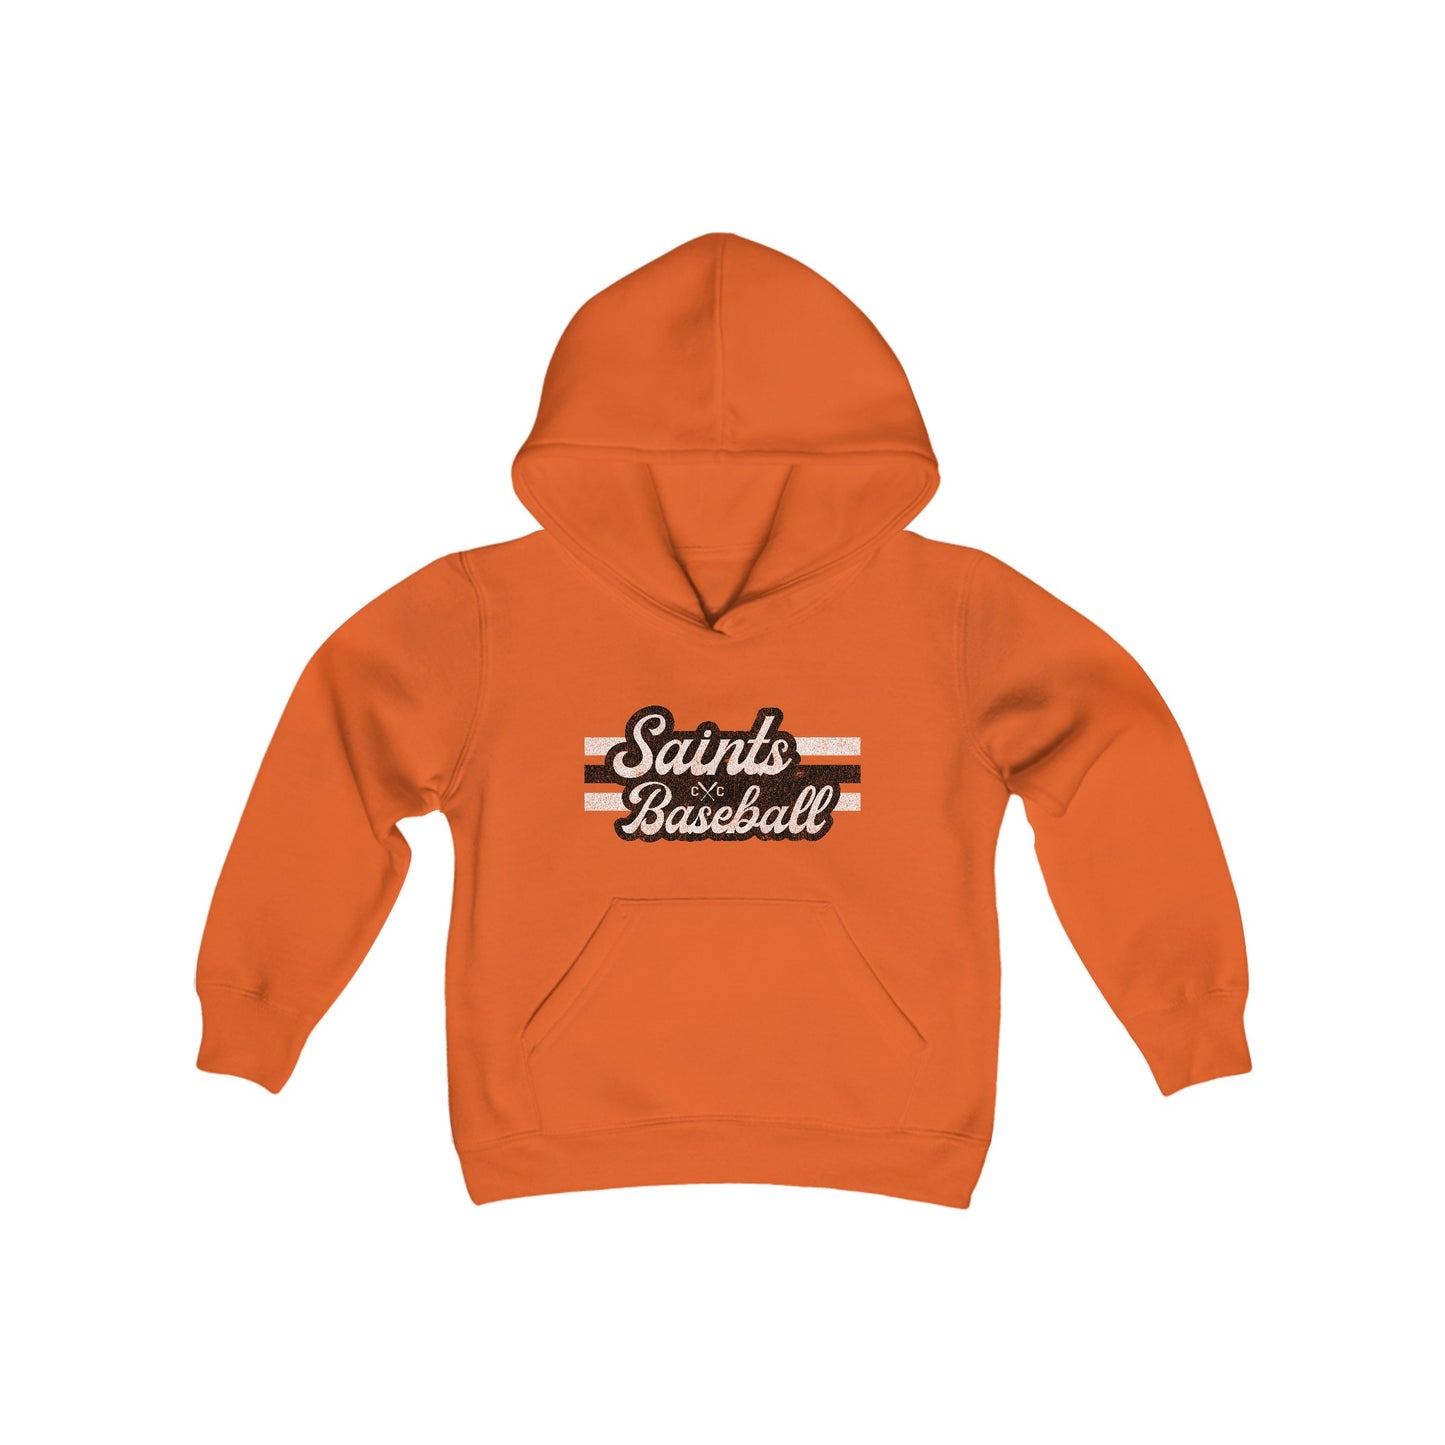 Saints Vintage Youth Unisex Heavy Blend Hooded Sweatshirt